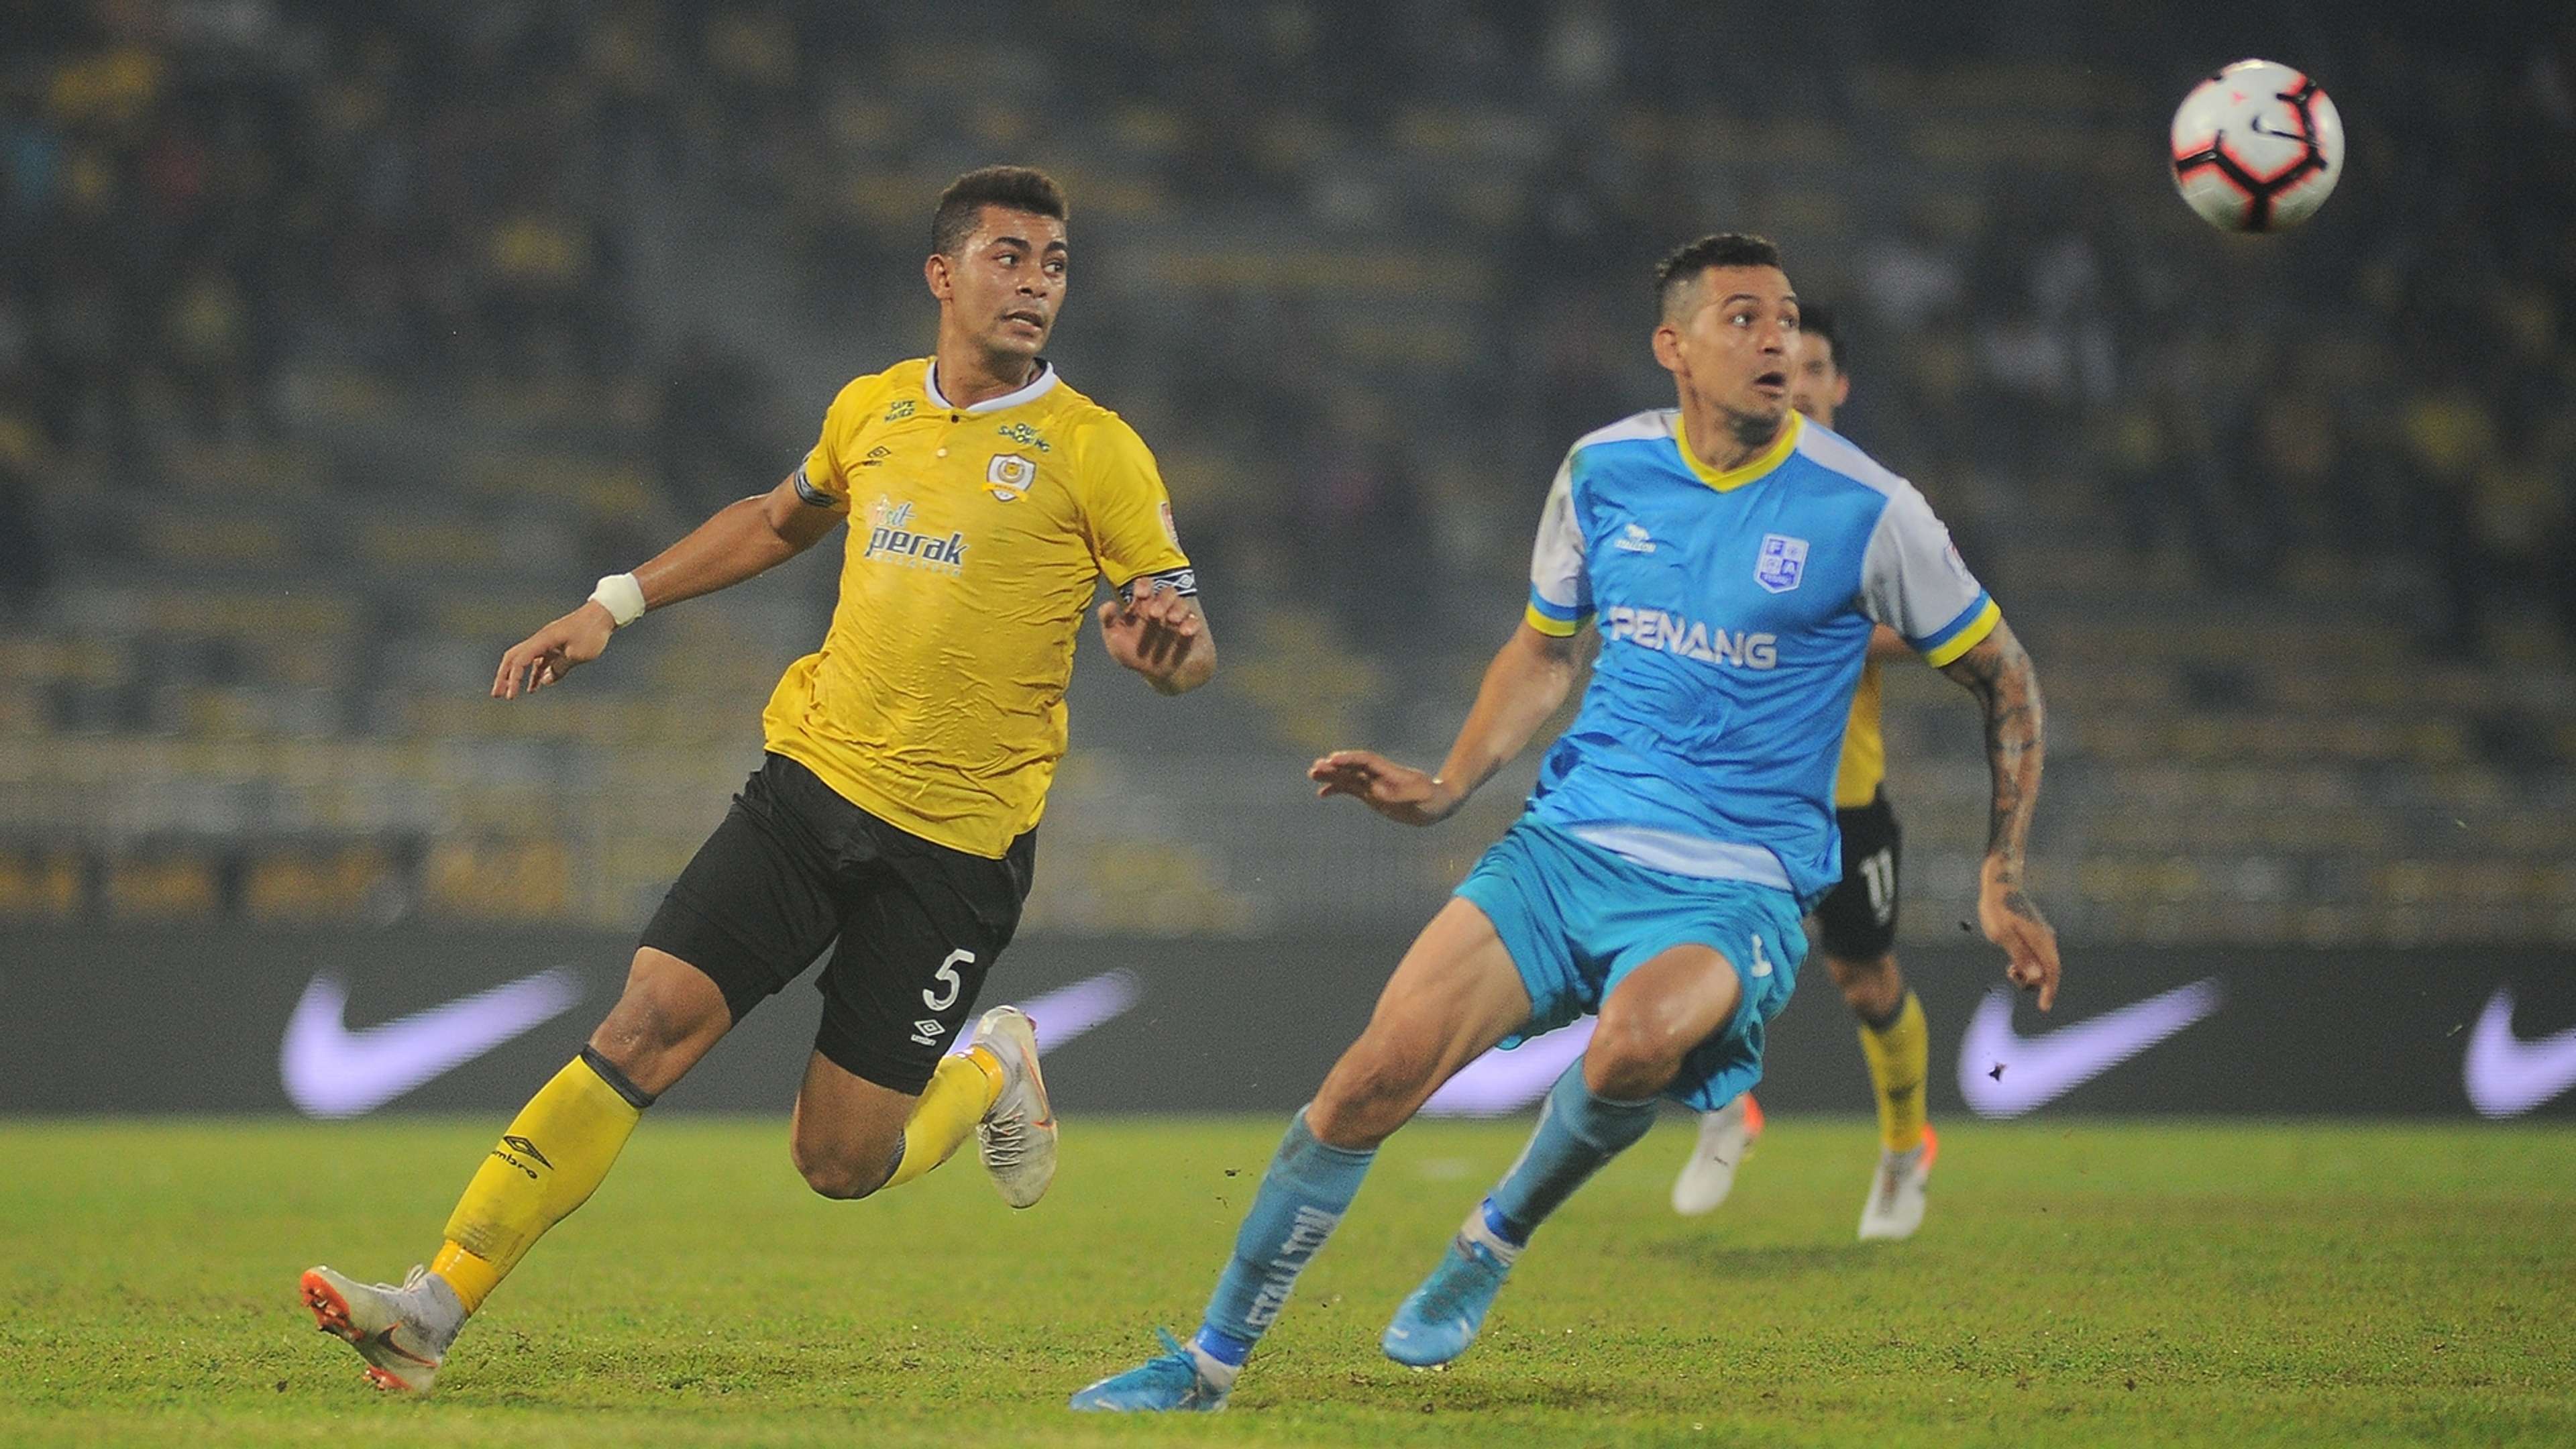 Casagrande, Perak v Pulau Pinang, Malaysia Cup, 17 Aug 2019